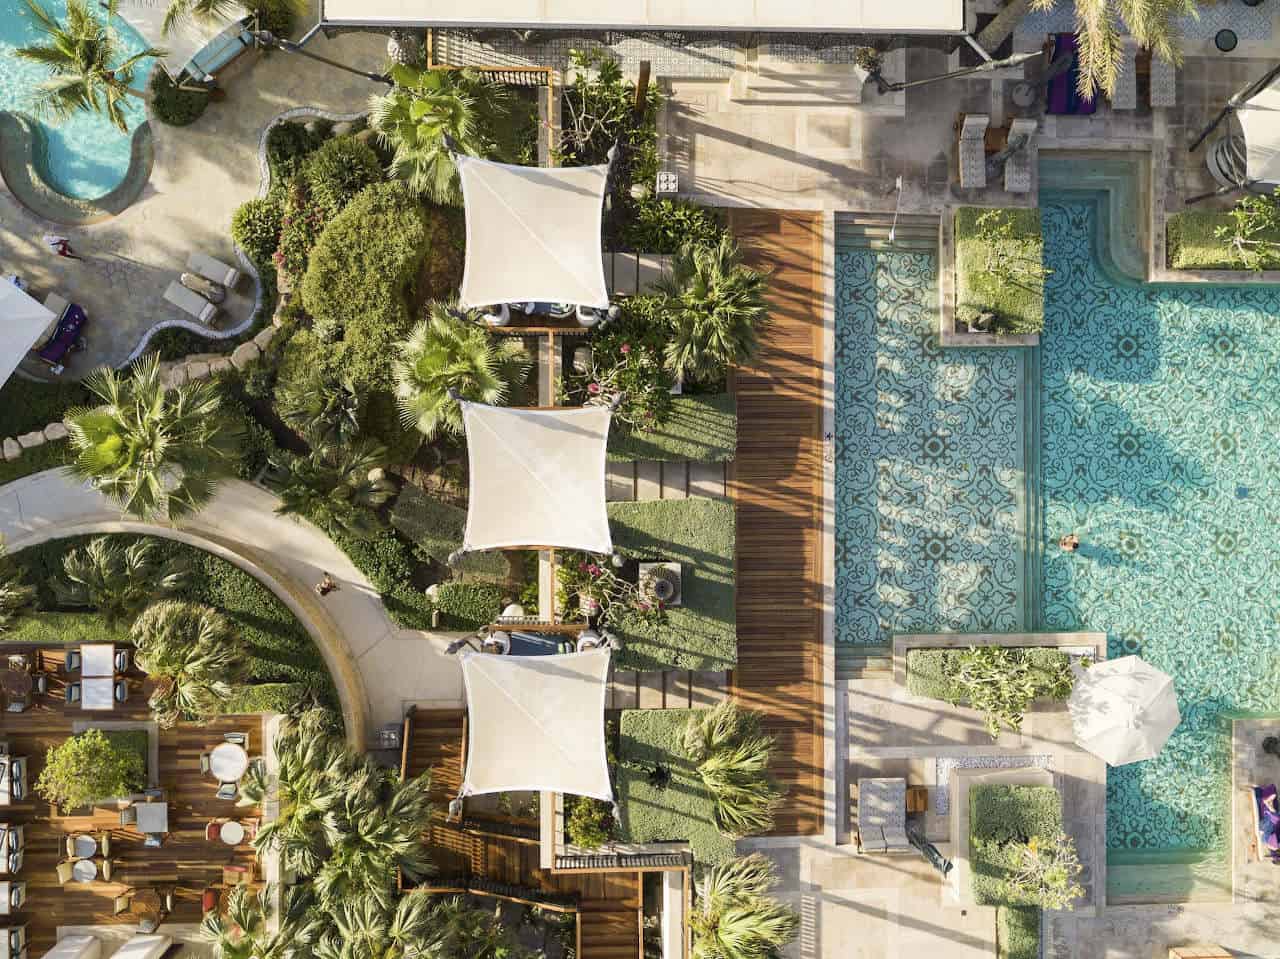 Aerial image of Jumeirah Al Naseem pool area